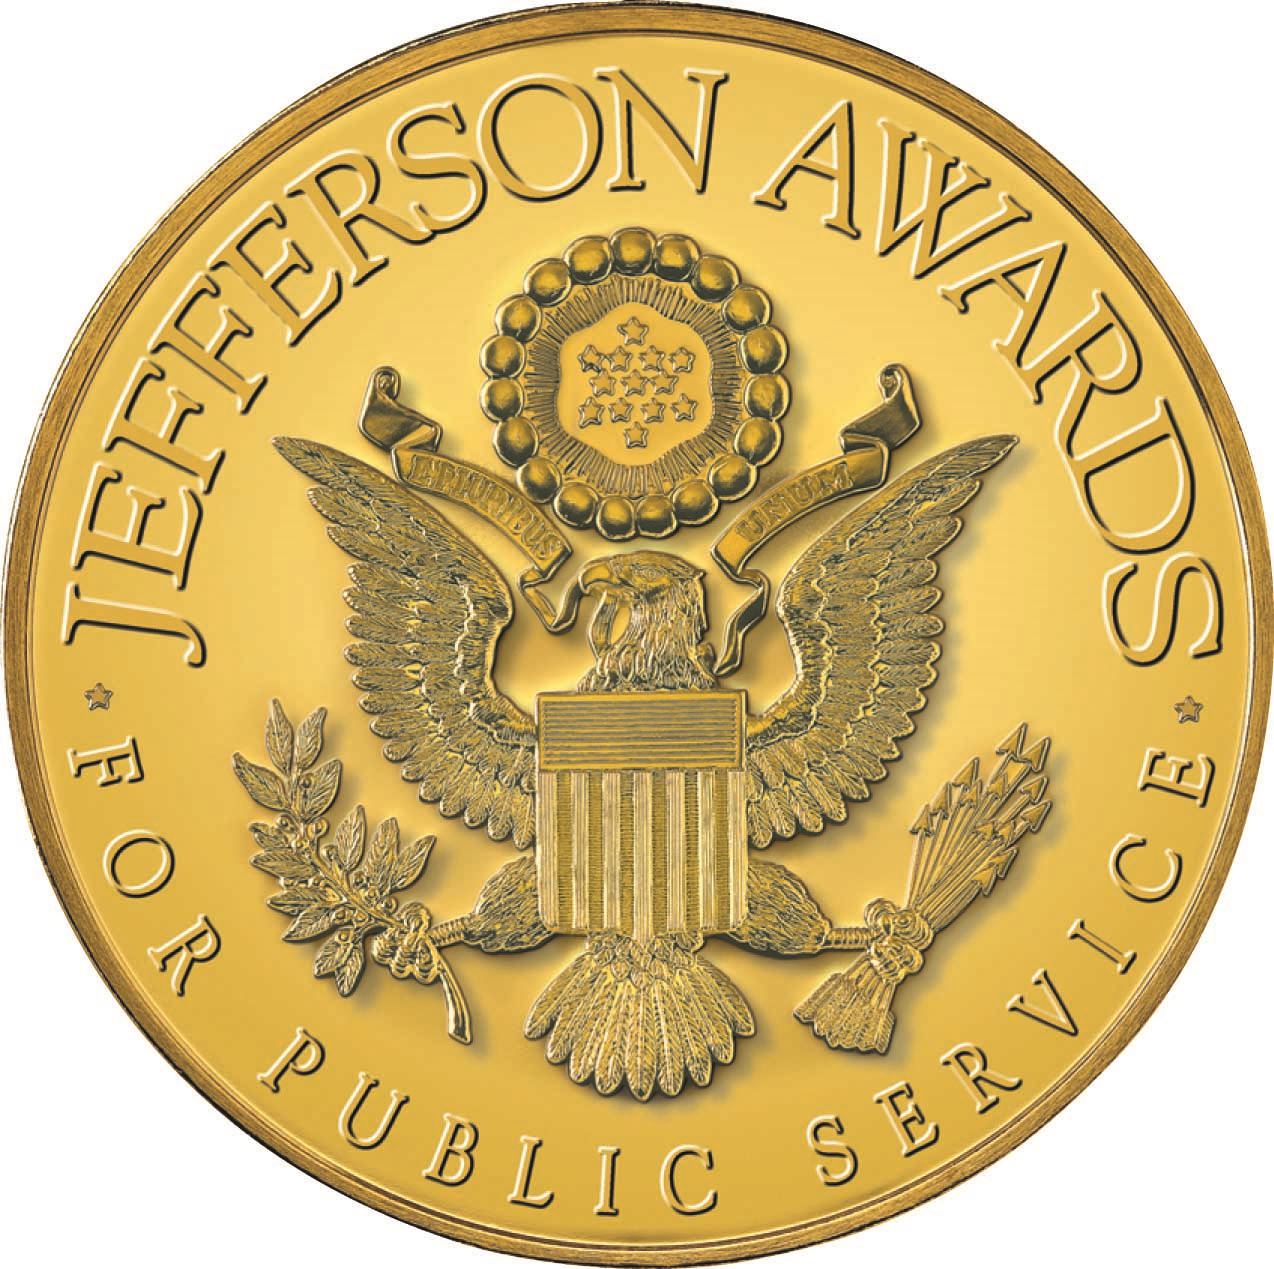 jefferson-awards-logo-3x3-medium-300-dpi-nb-2-2jpg